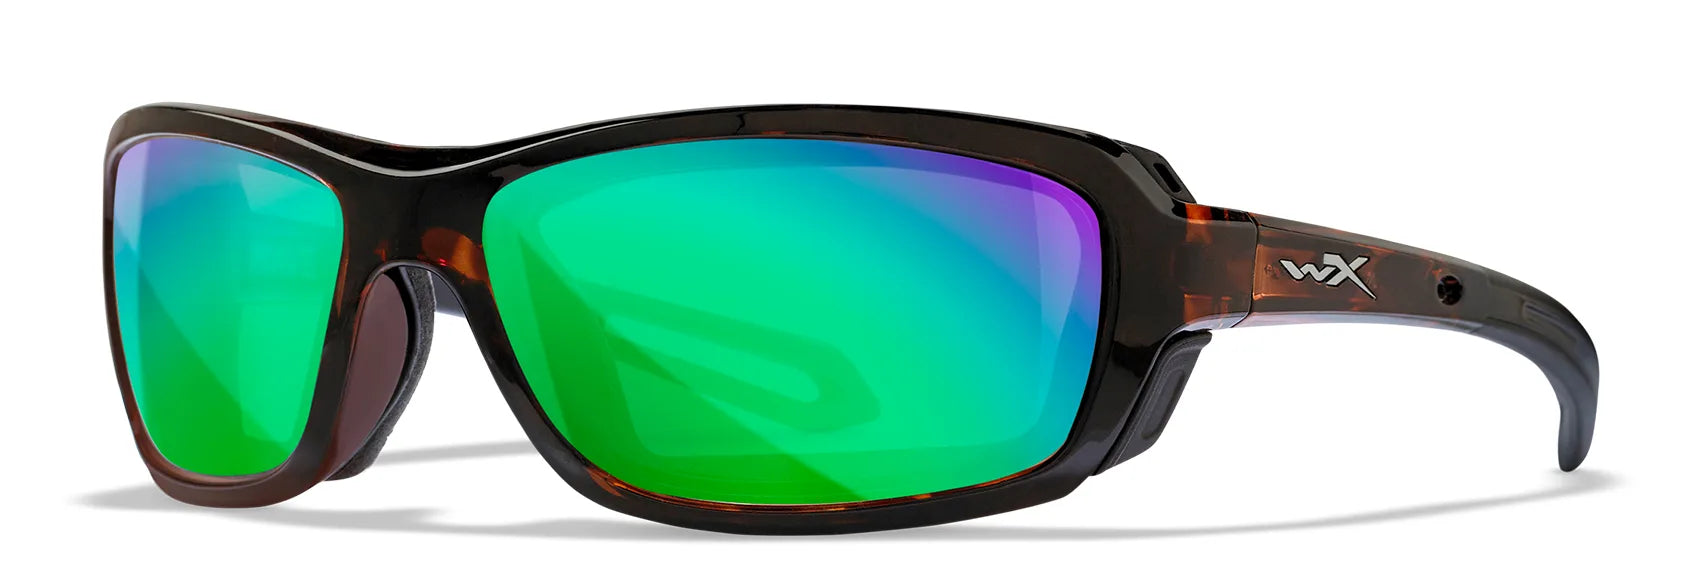 Wiley X Wave Sunglasses Gloss Demi / Polarized Emerald Mirror